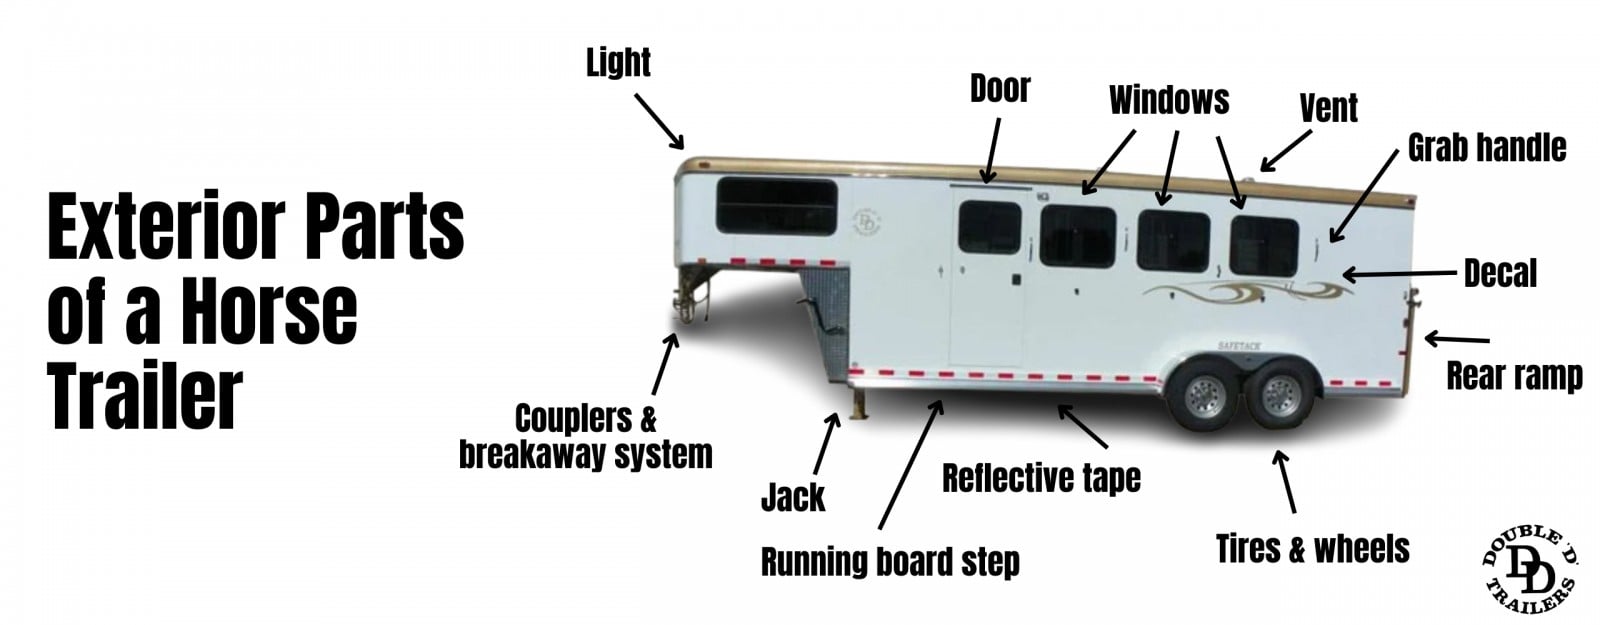 Exterior parts of a horse trailer diagram 